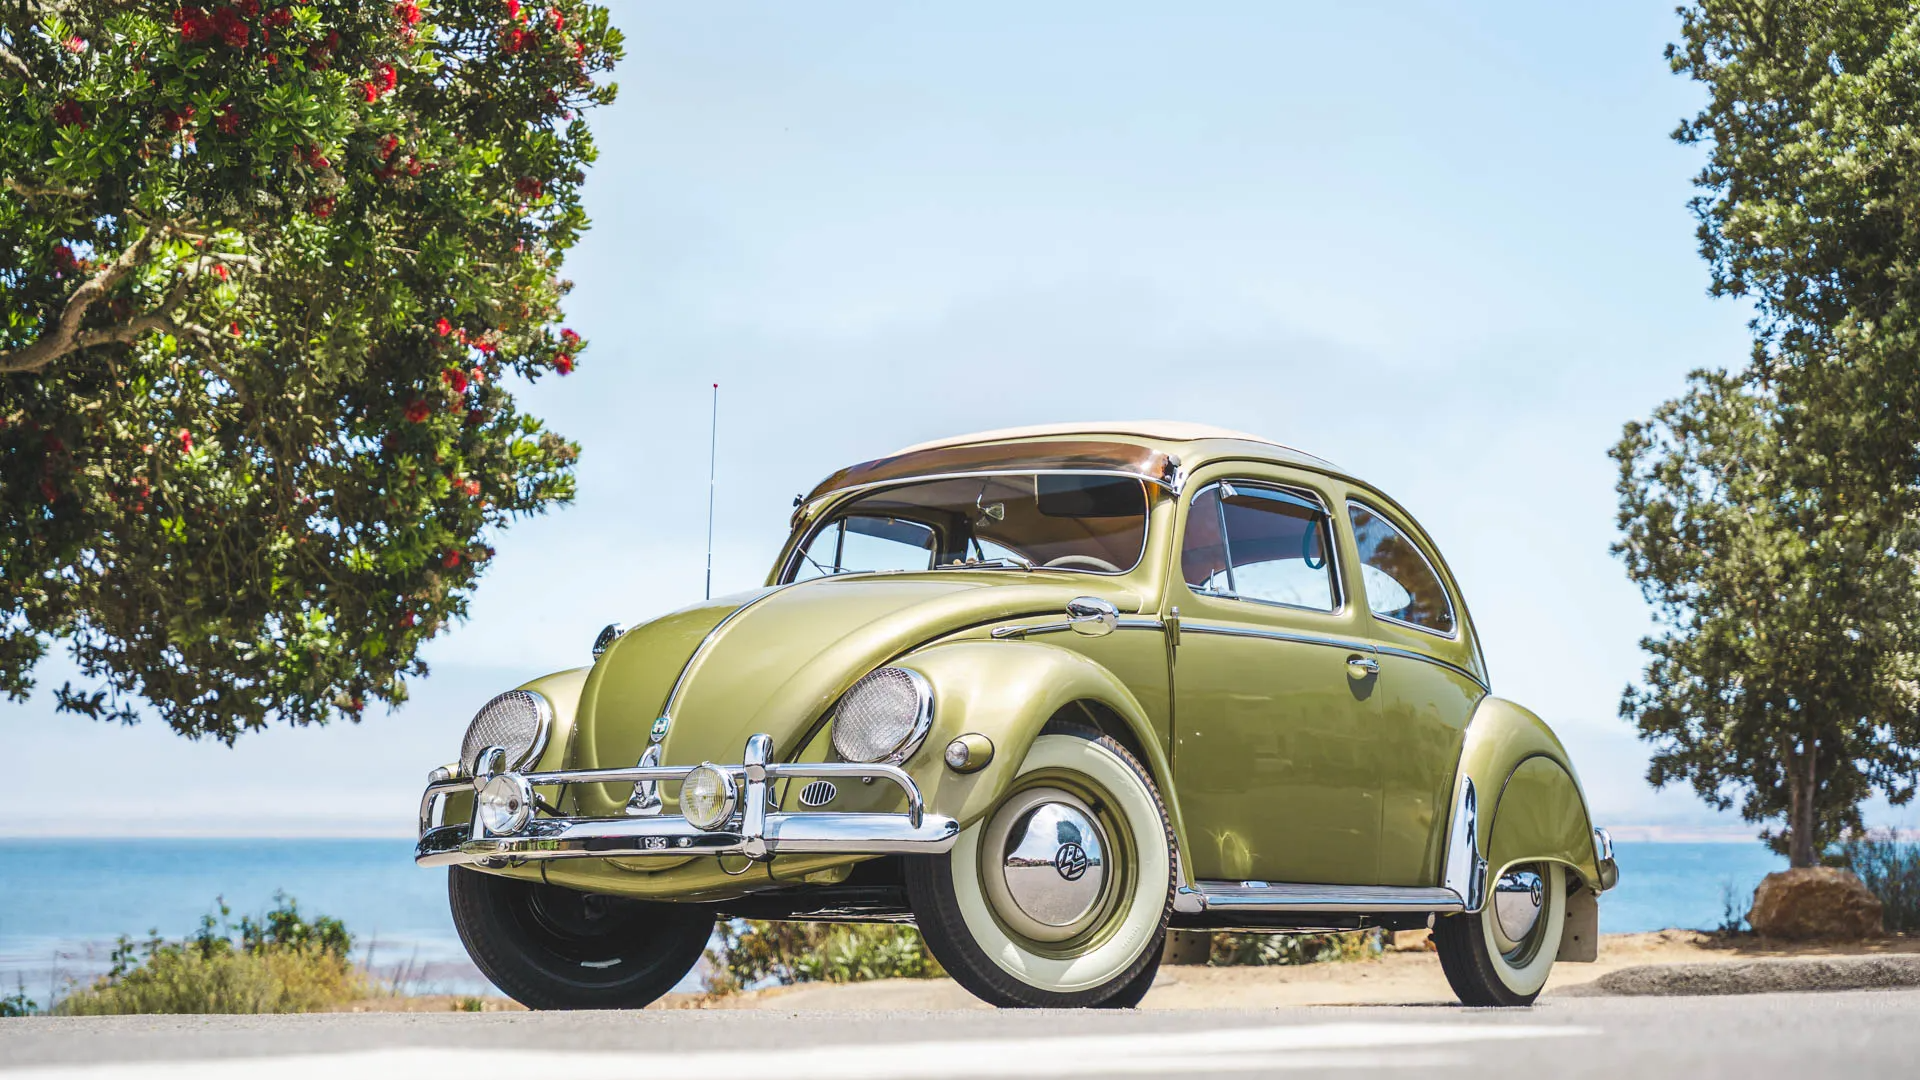 1956 Volkswagen Beetle green sedan parked